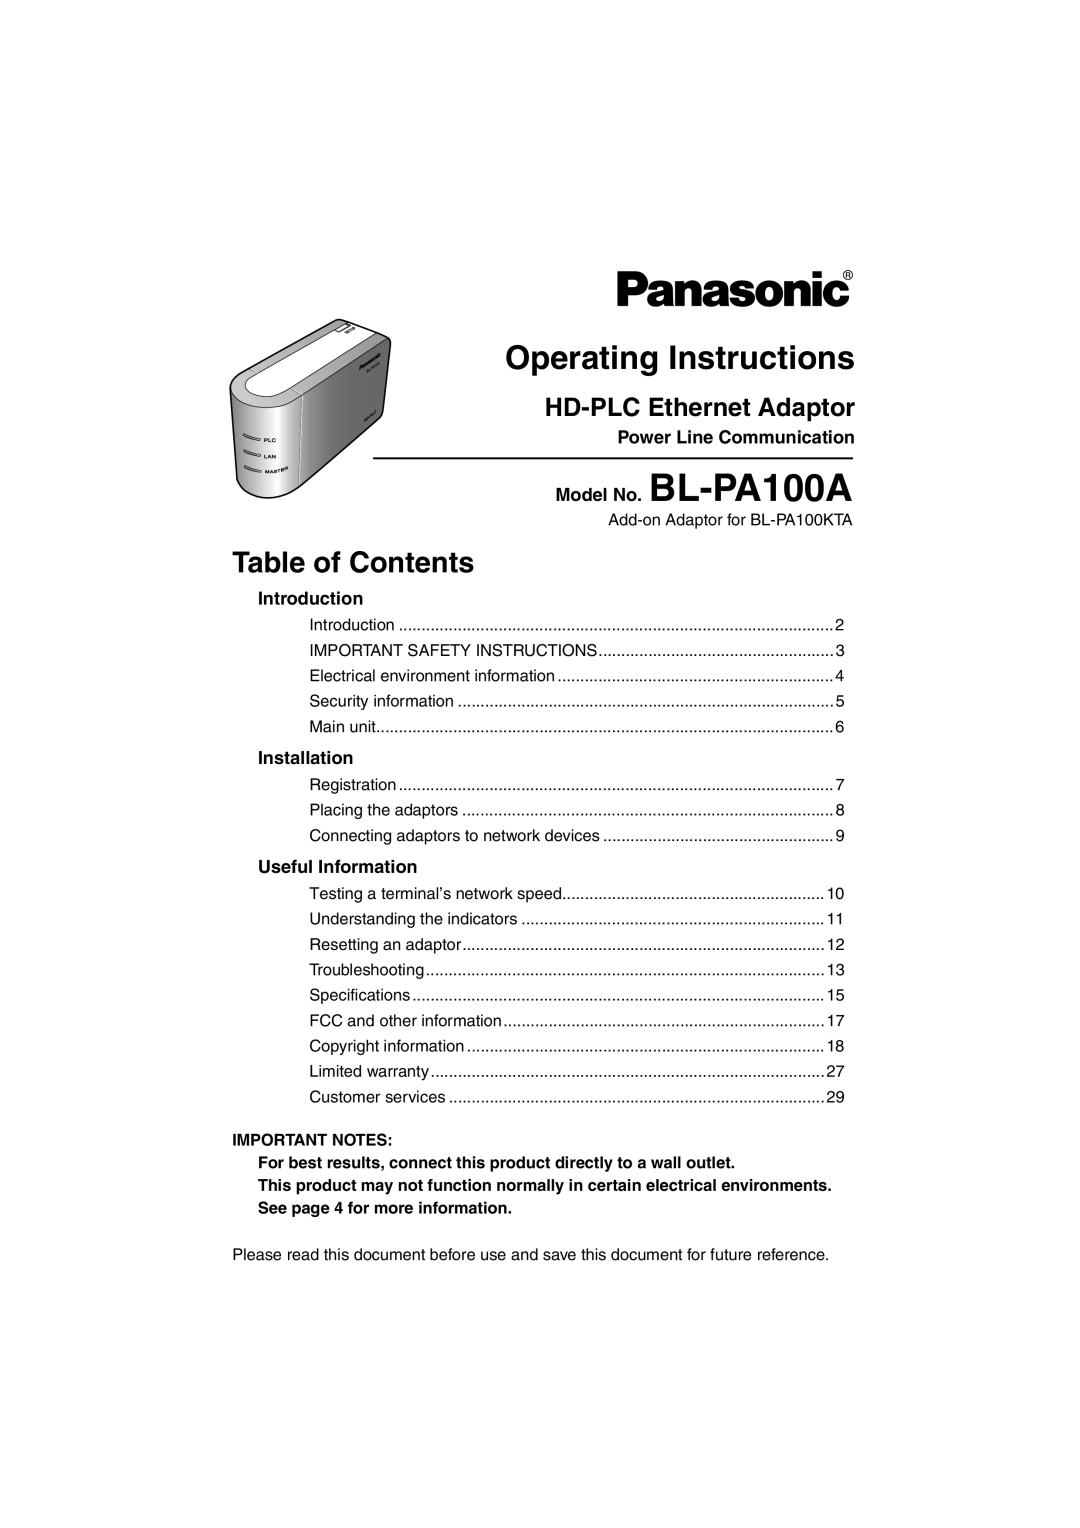 Panasonic important safety instructions HD-PLC Ethernet Adaptor, Power Line Communication, Model No. BL-PA100A 